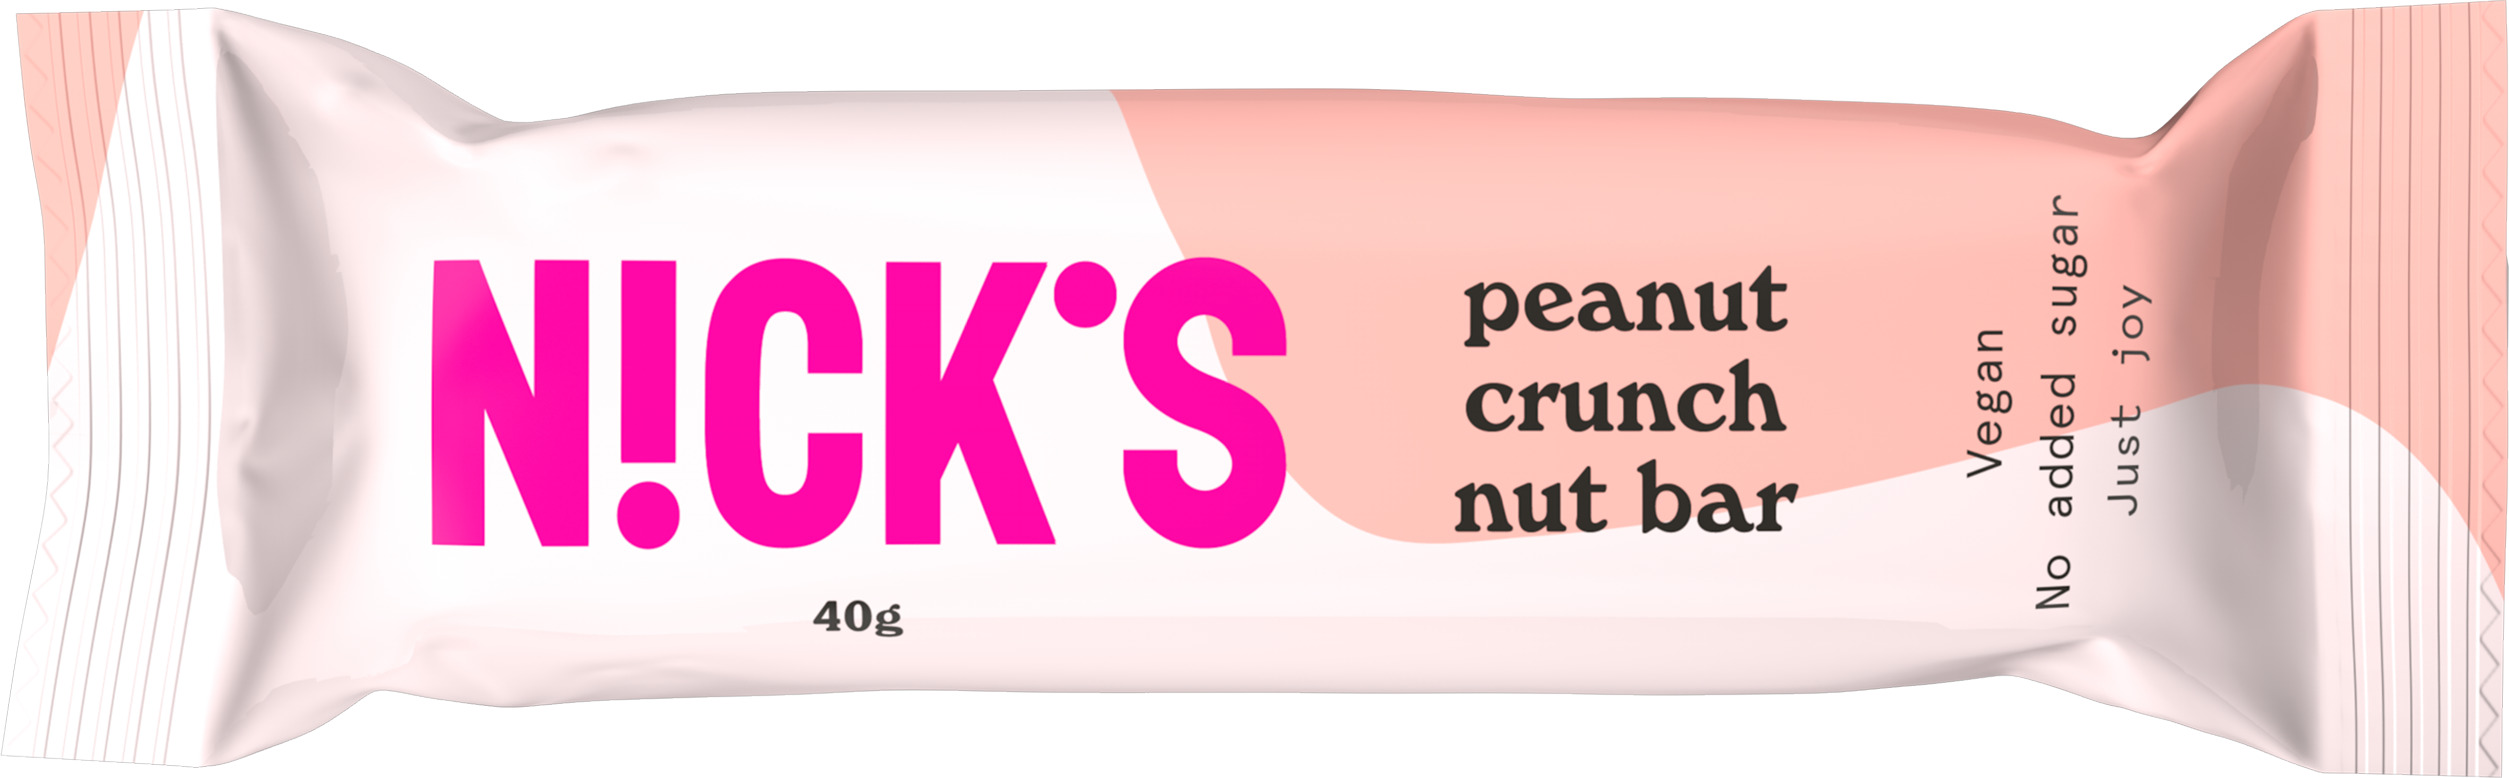 Nick's Nut Bar Peanut Crunch 40 g